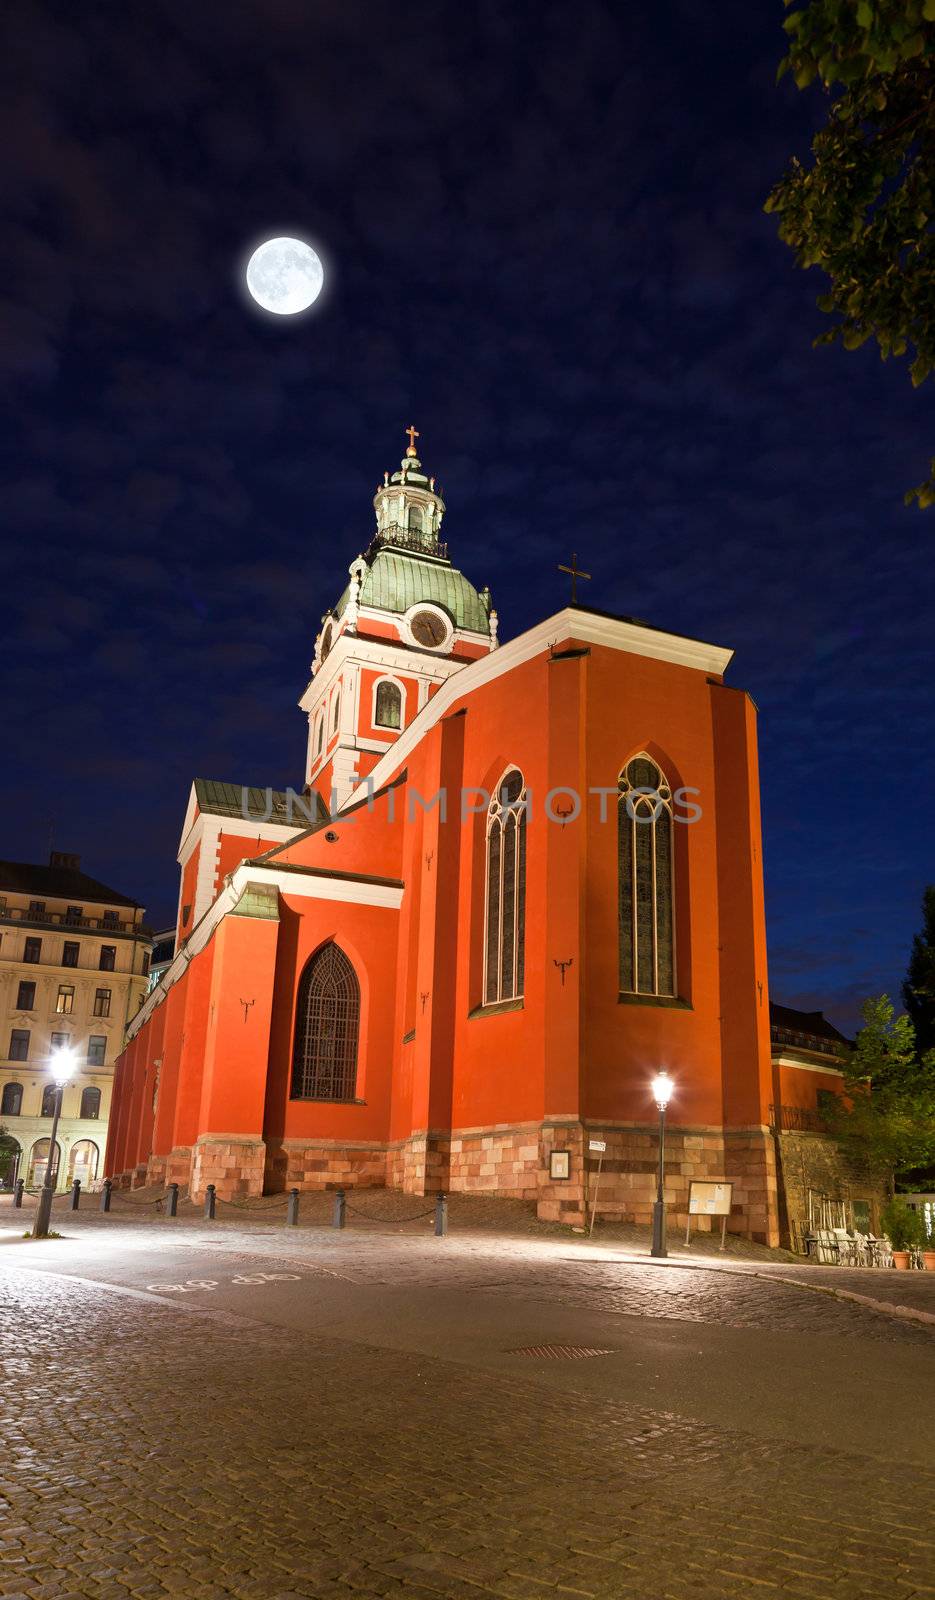 Sankt Jakobs kyrka church in stockholm at night